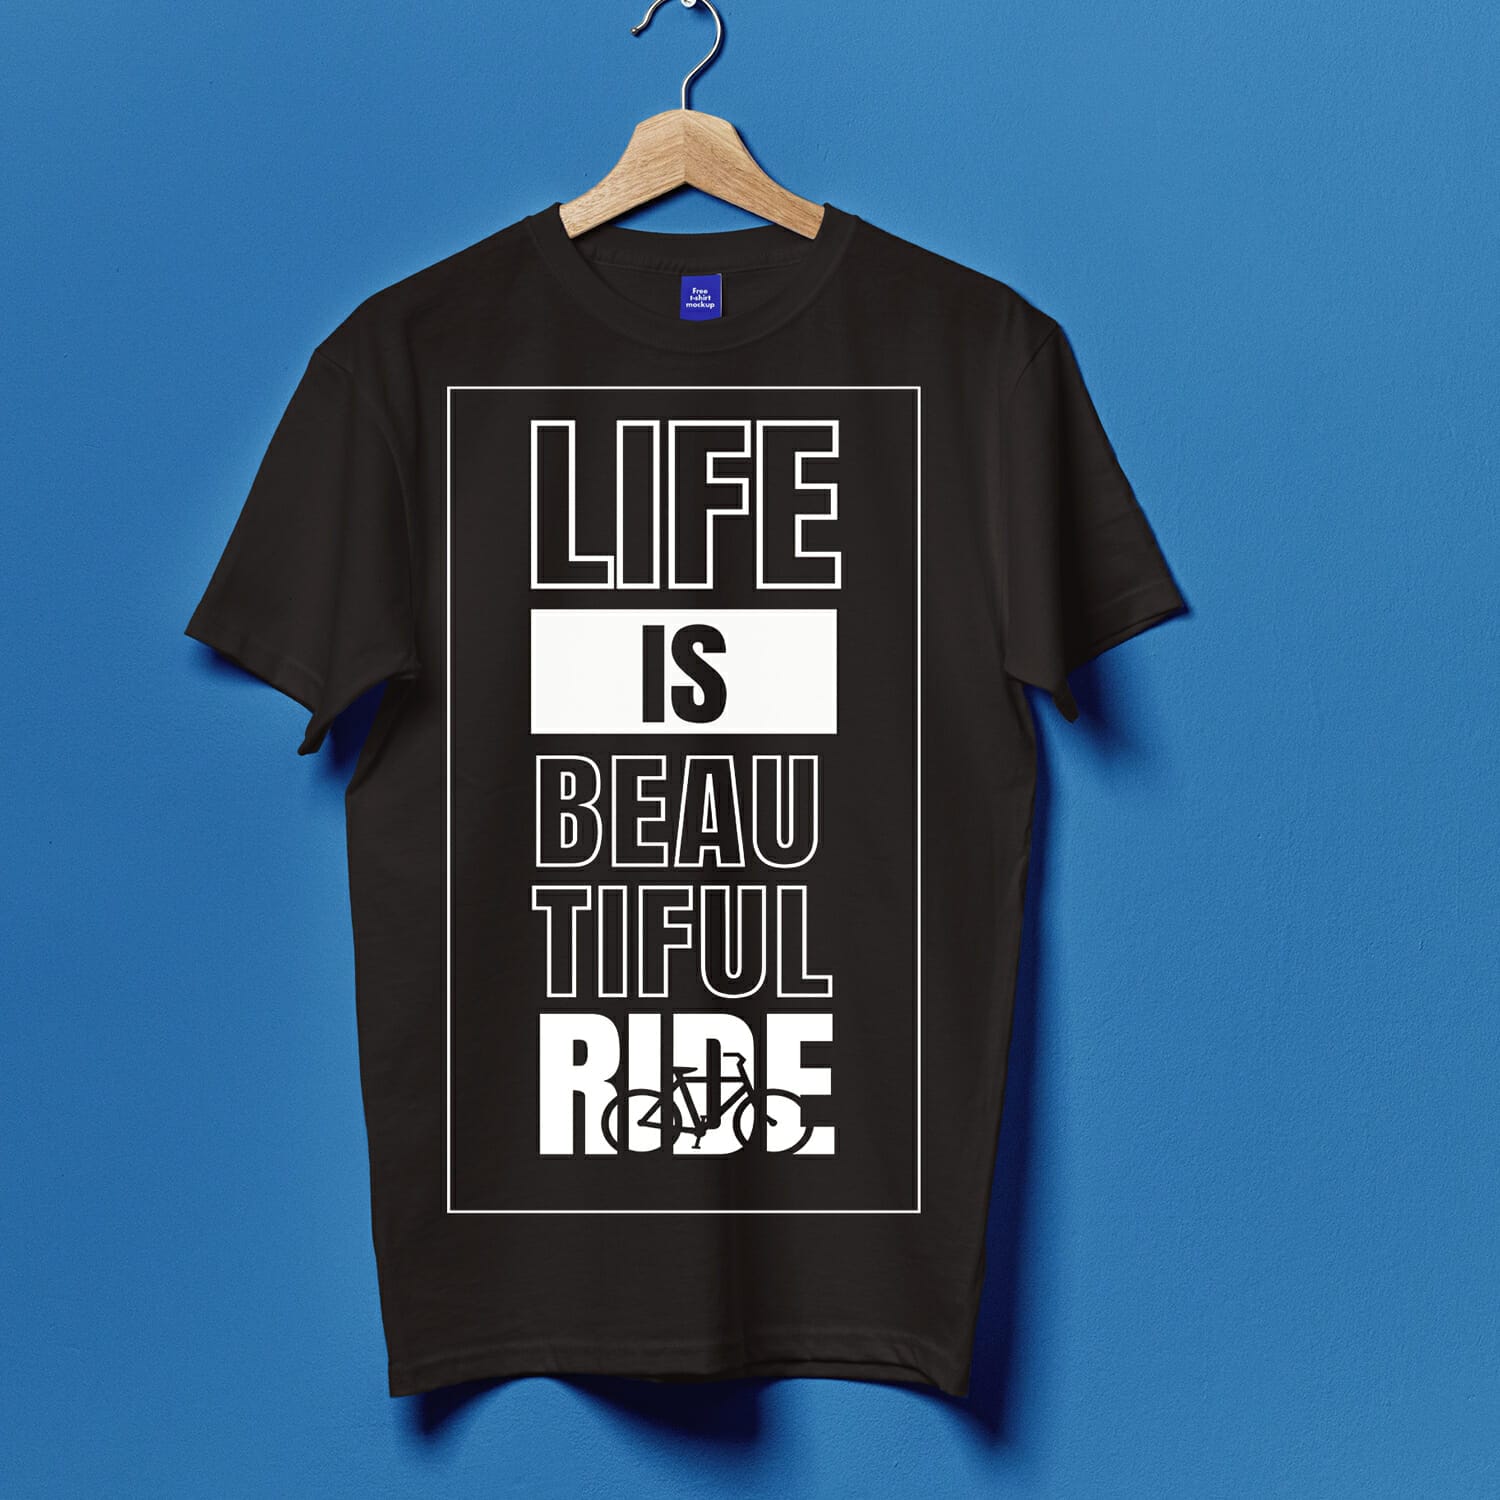 Life is beautiful ride t-shirt design